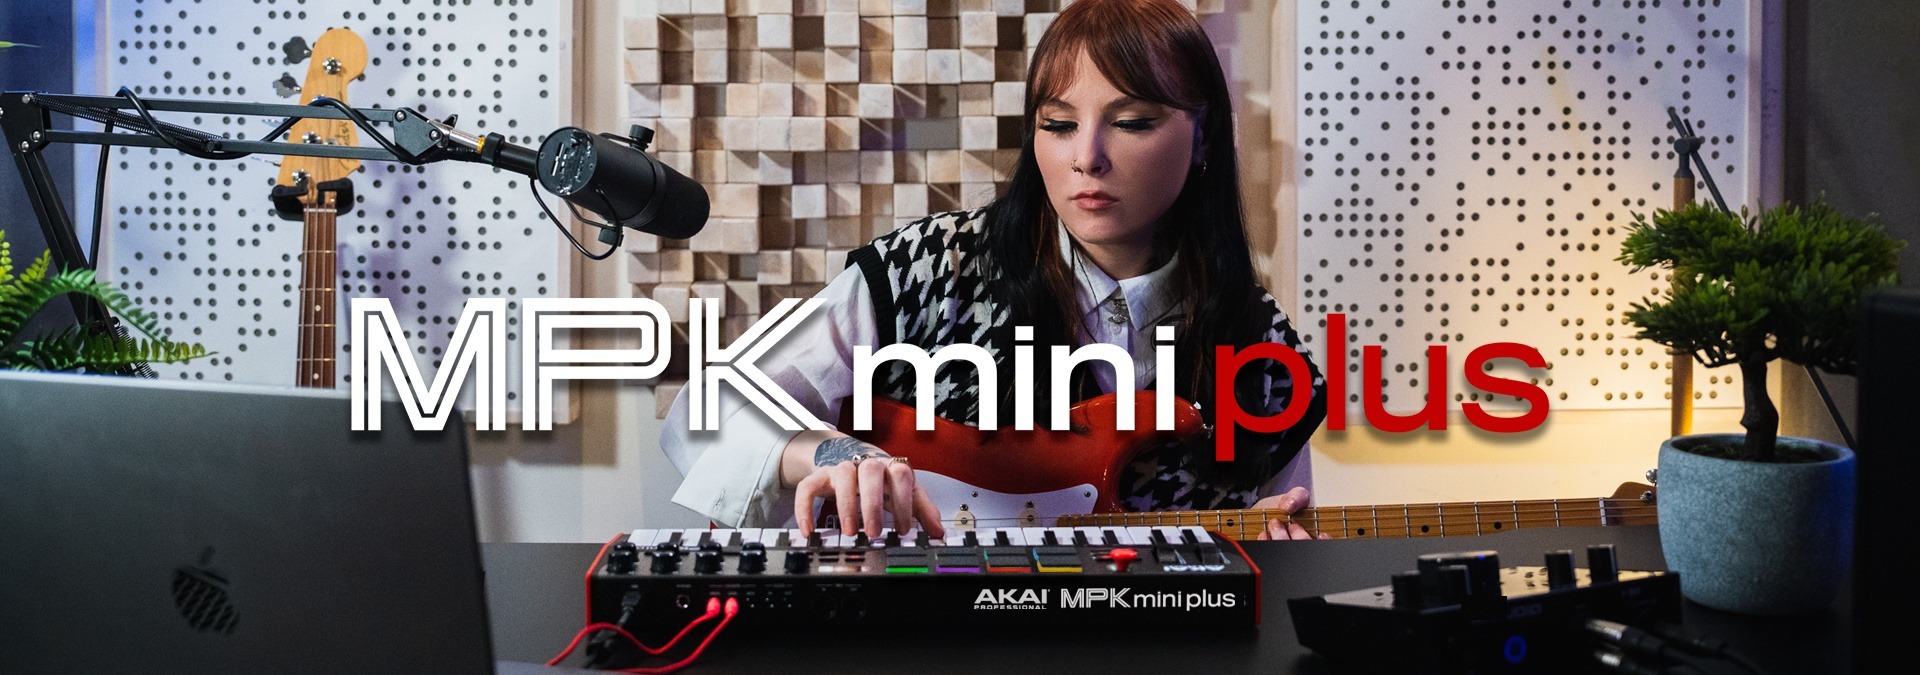 Music Production Hardware & Software | Akai Pro